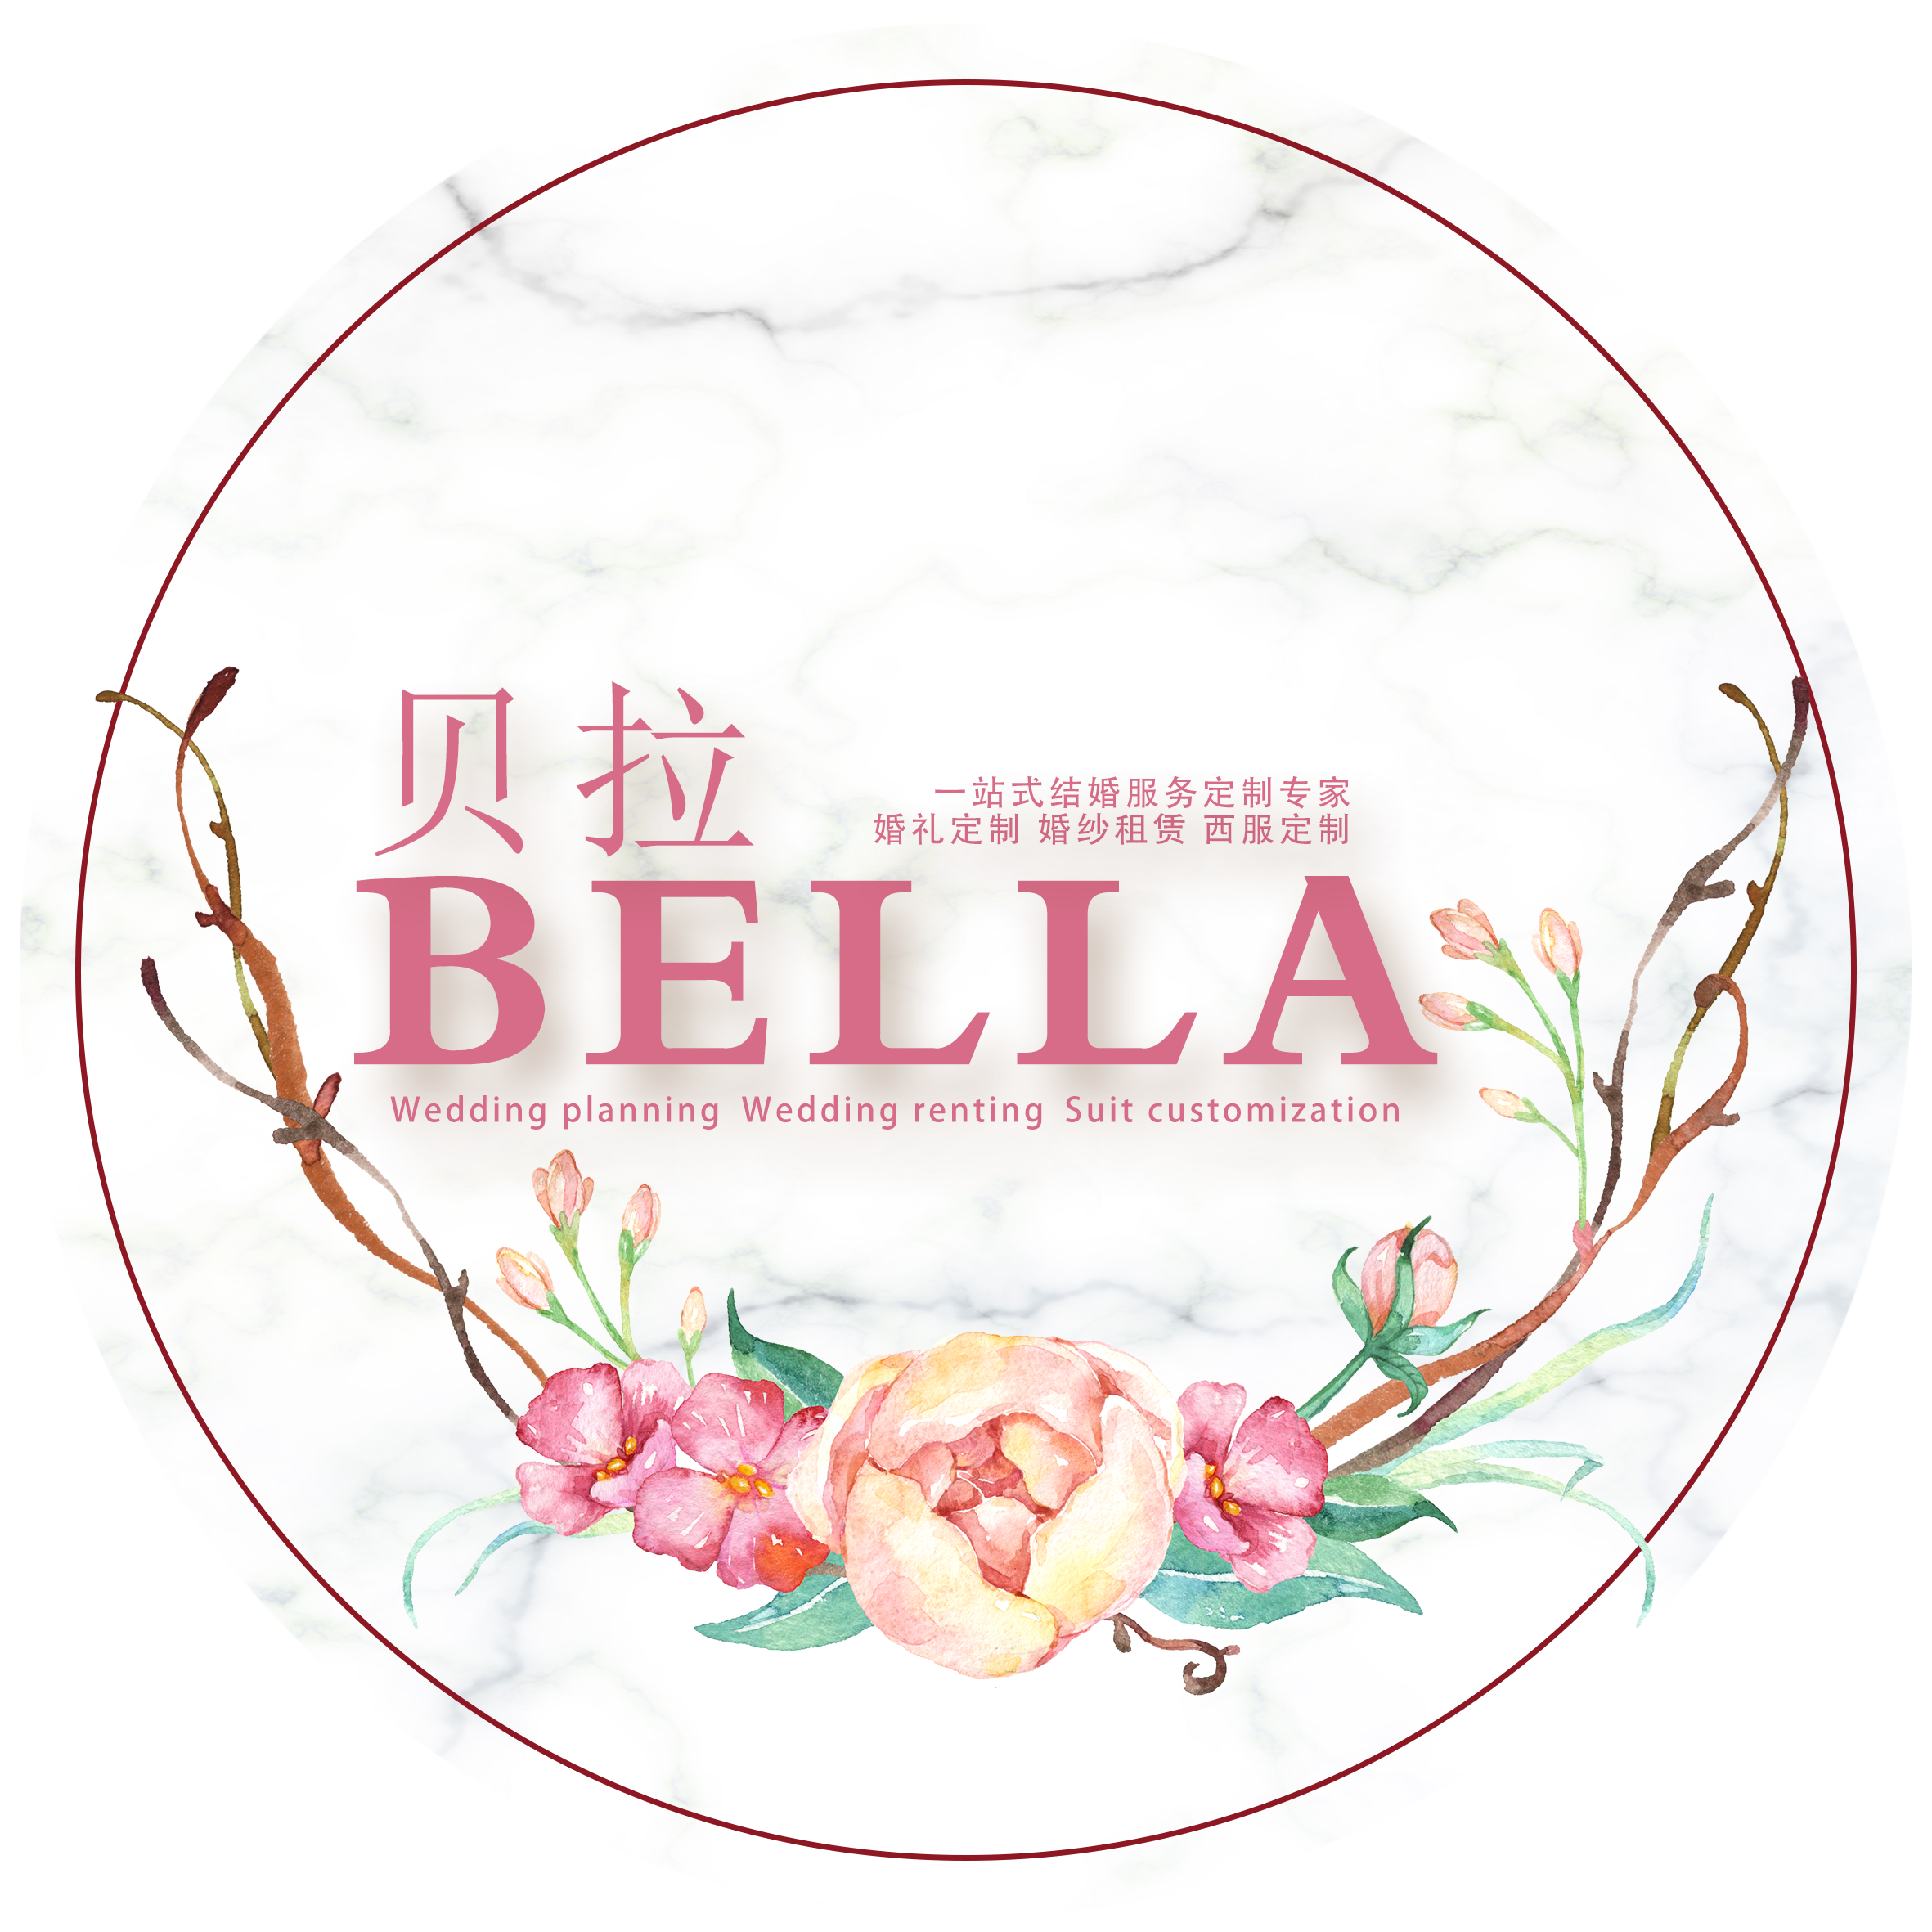 BELLA贝拉·婚礼策划机构